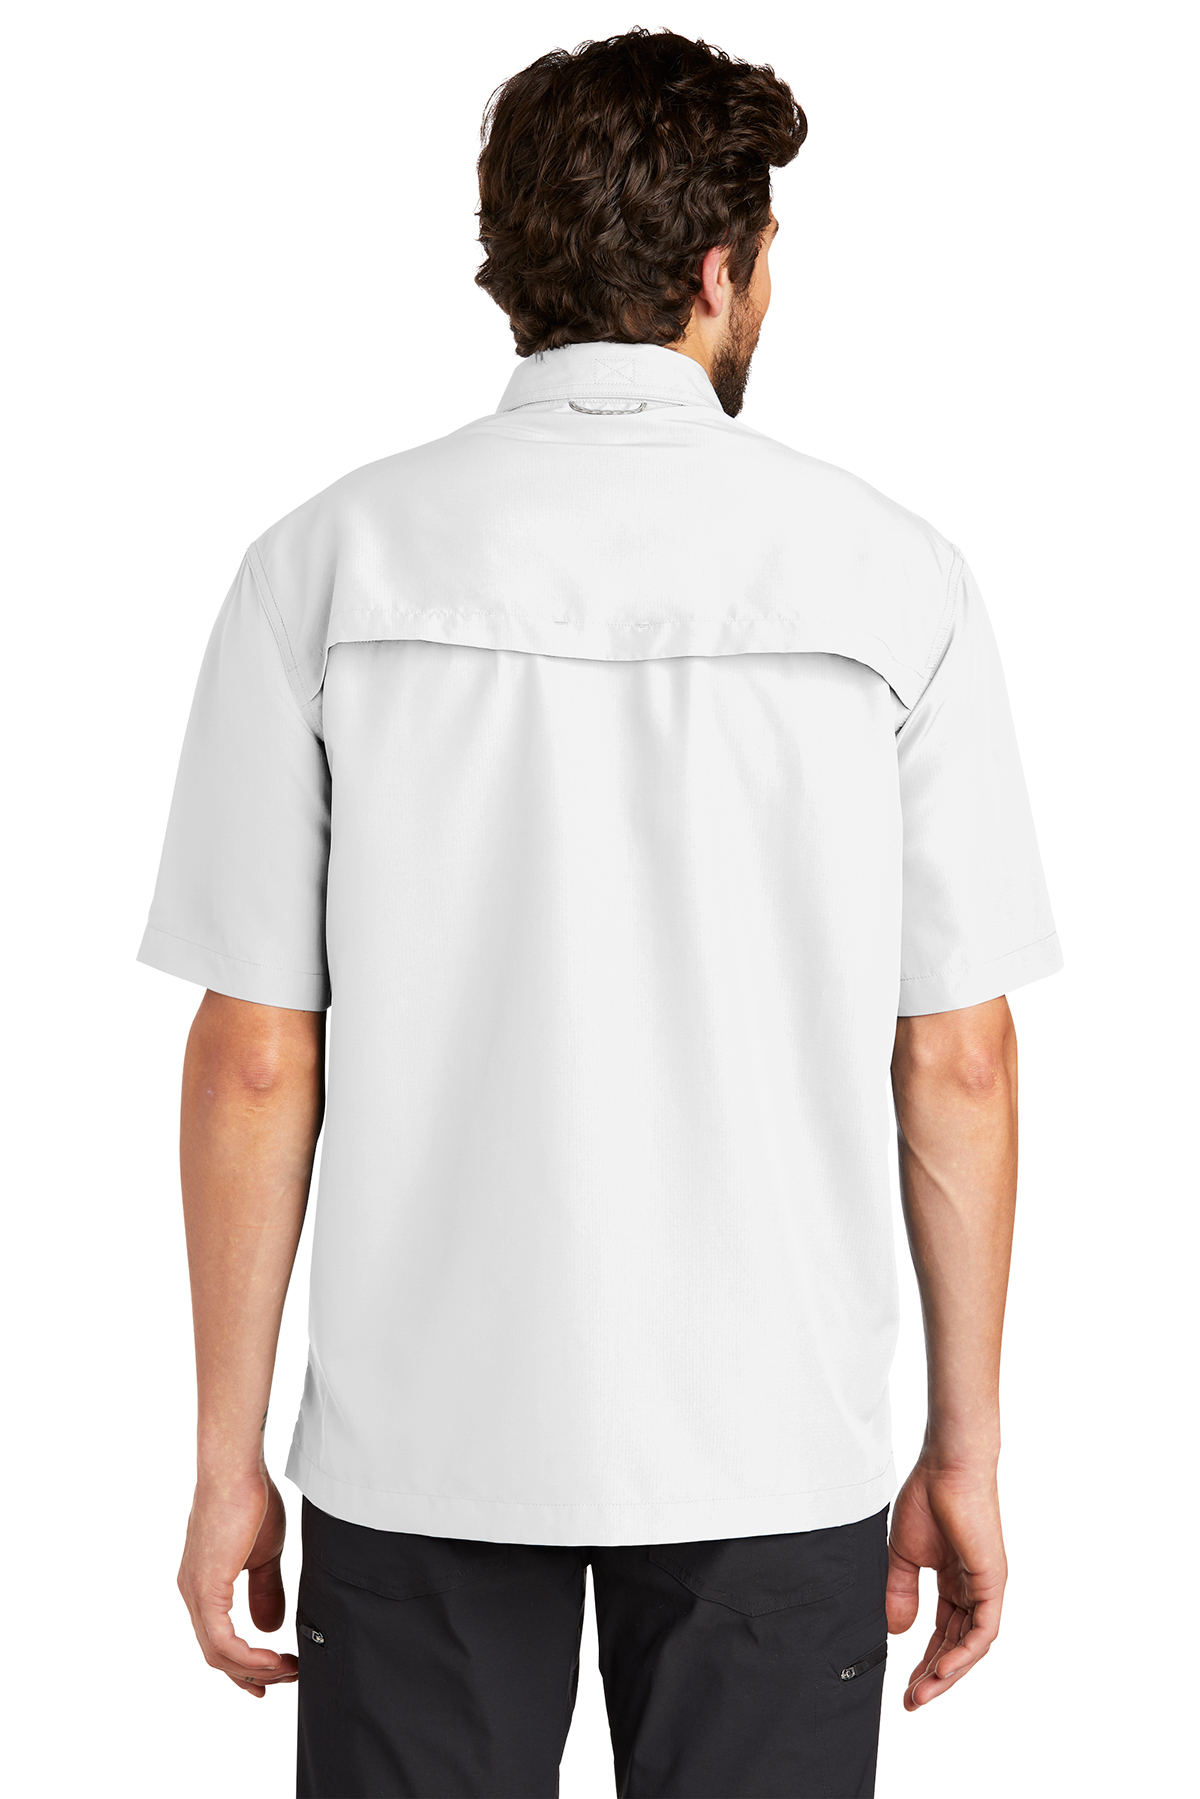 Eddie Bauer Long Sleeve Performance Fishing Shirt with logo